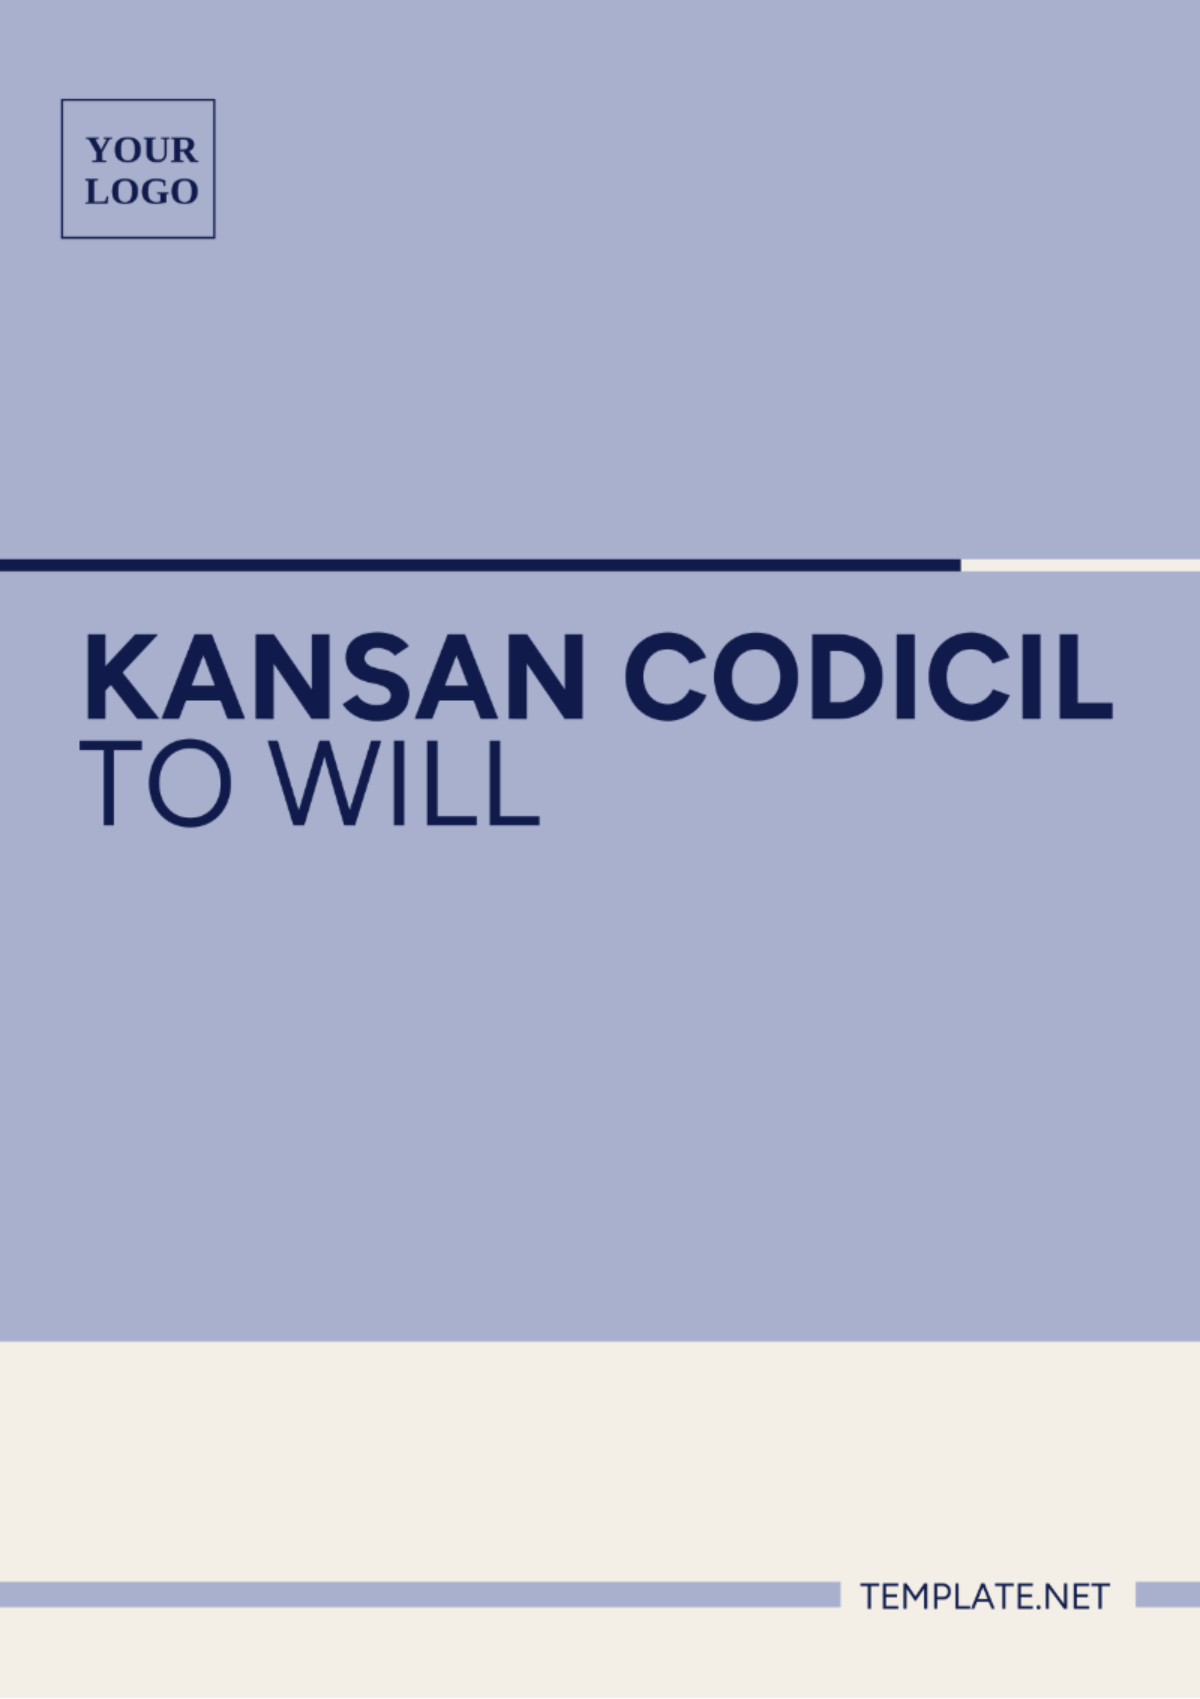 Kansas Codicil to Will Template